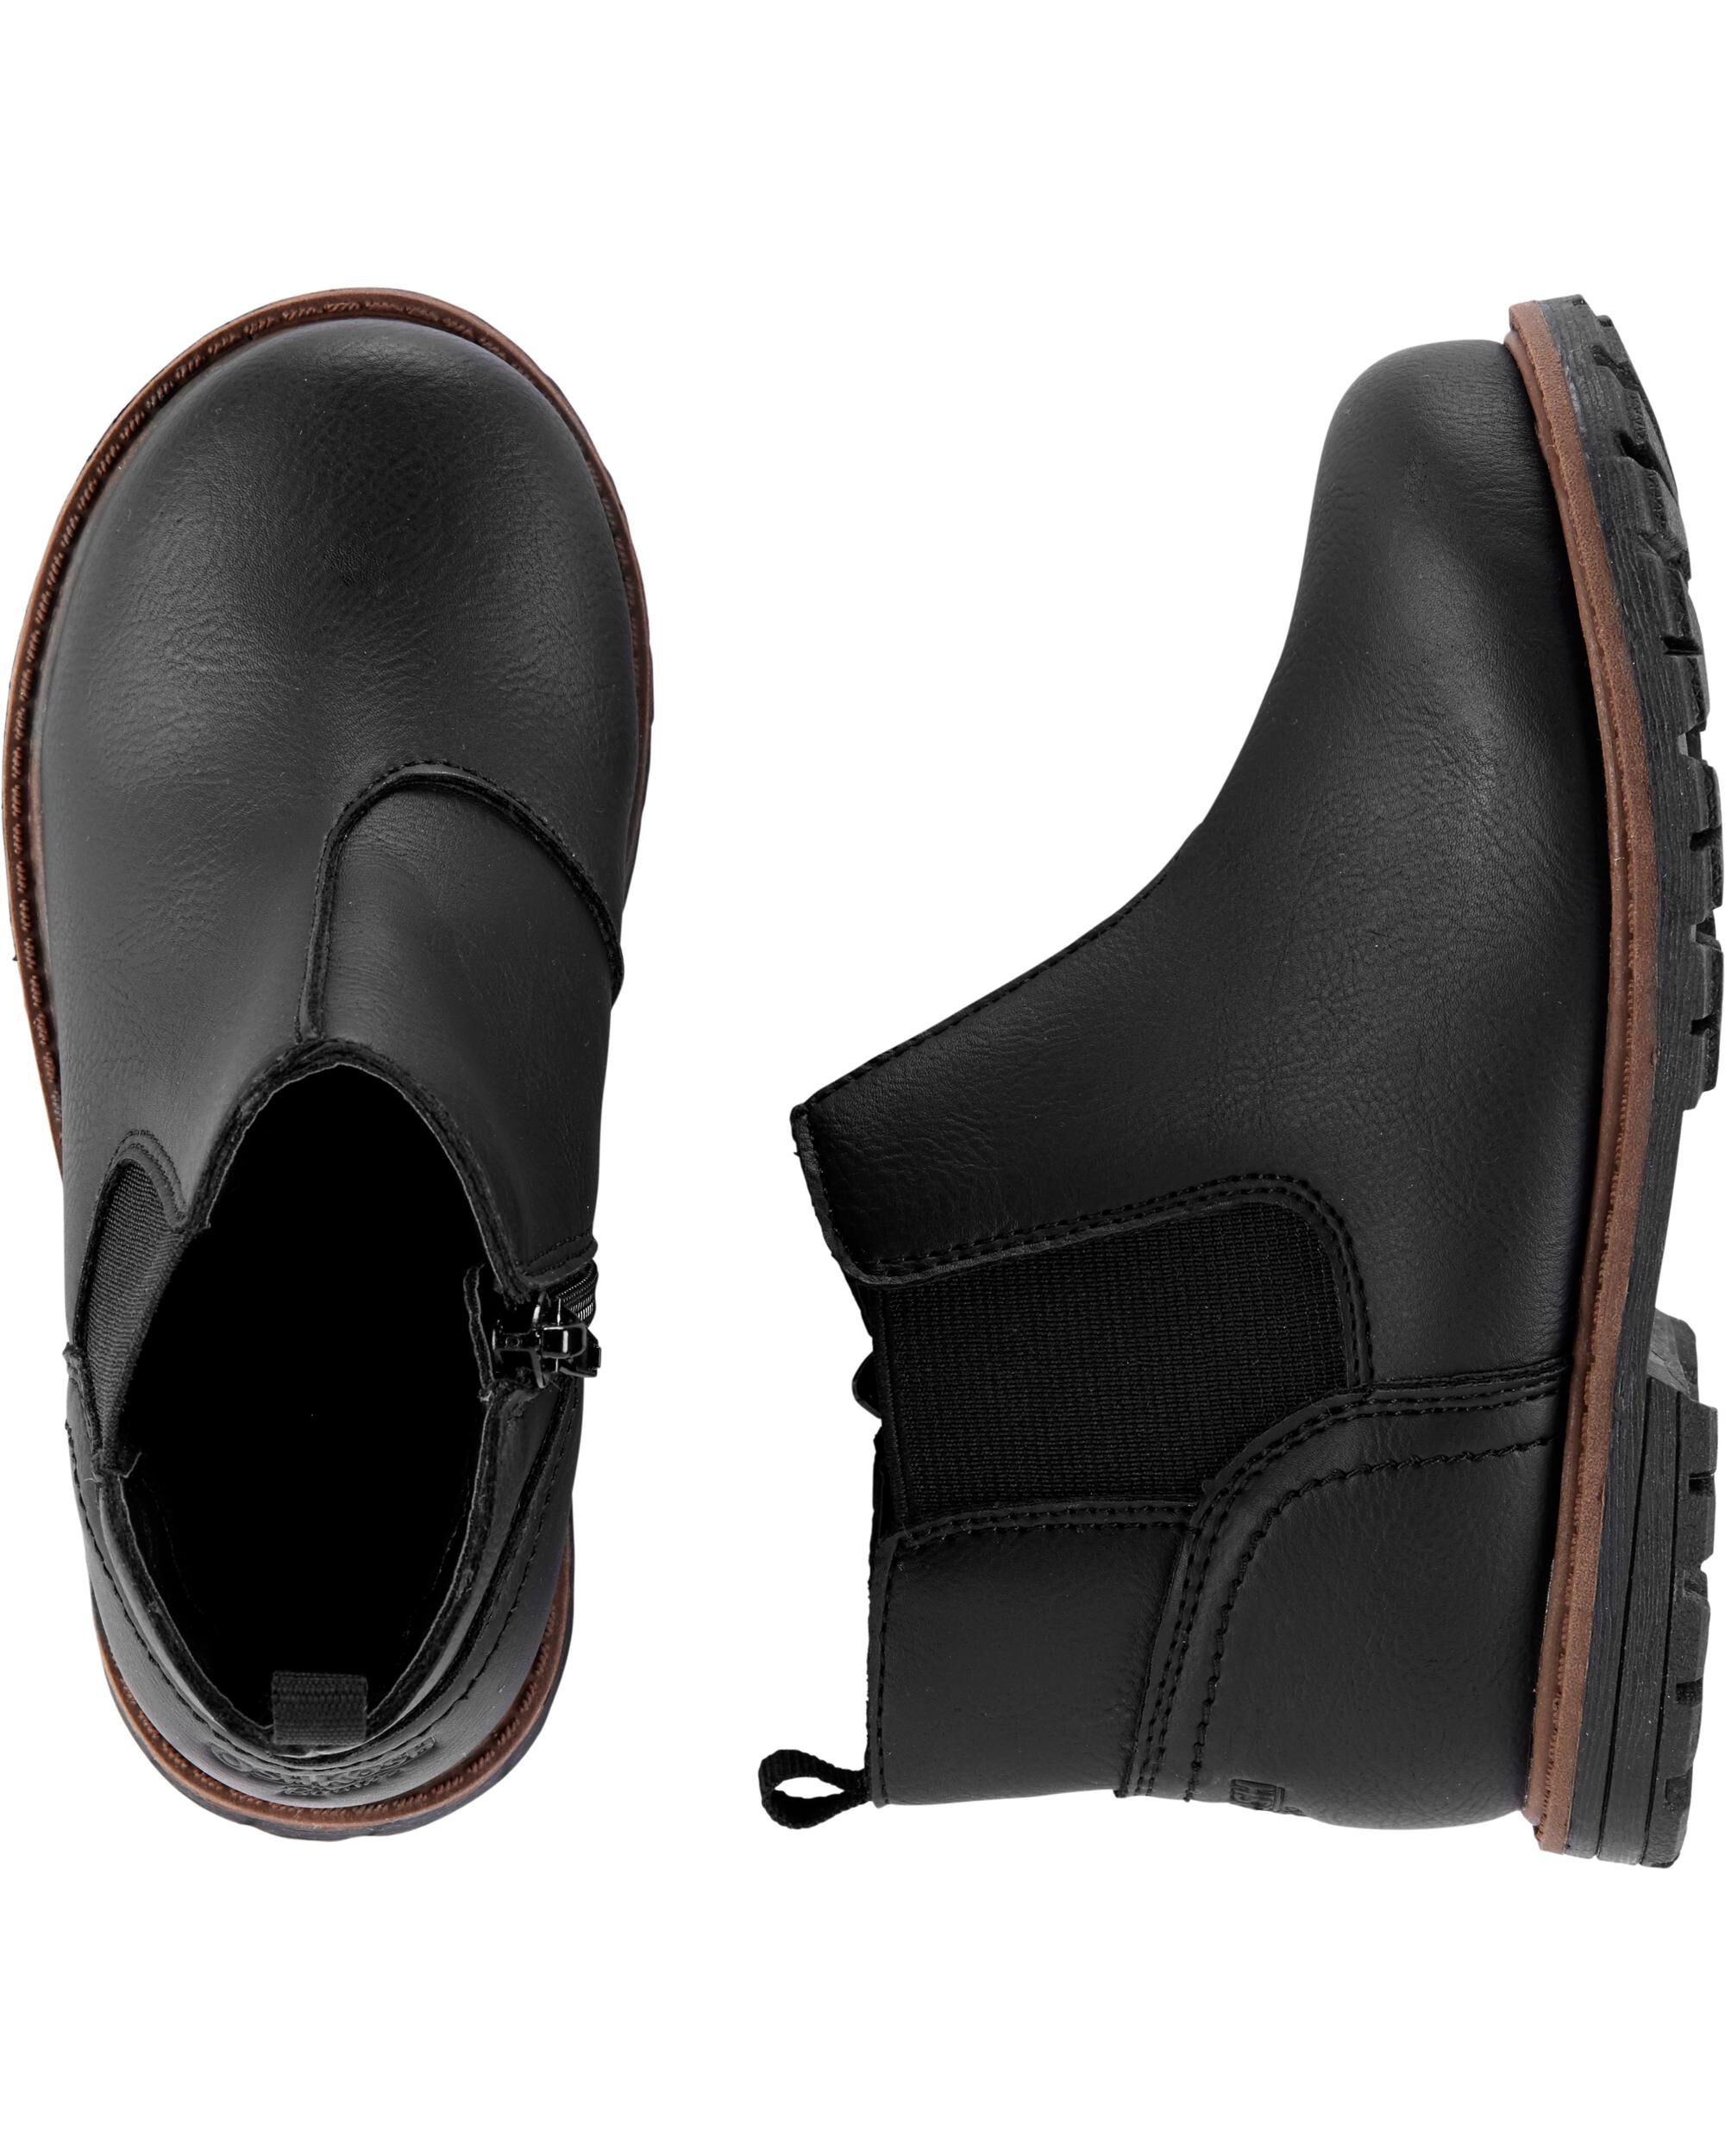 OshKosh Black Ankle Boots | oshkosh.com